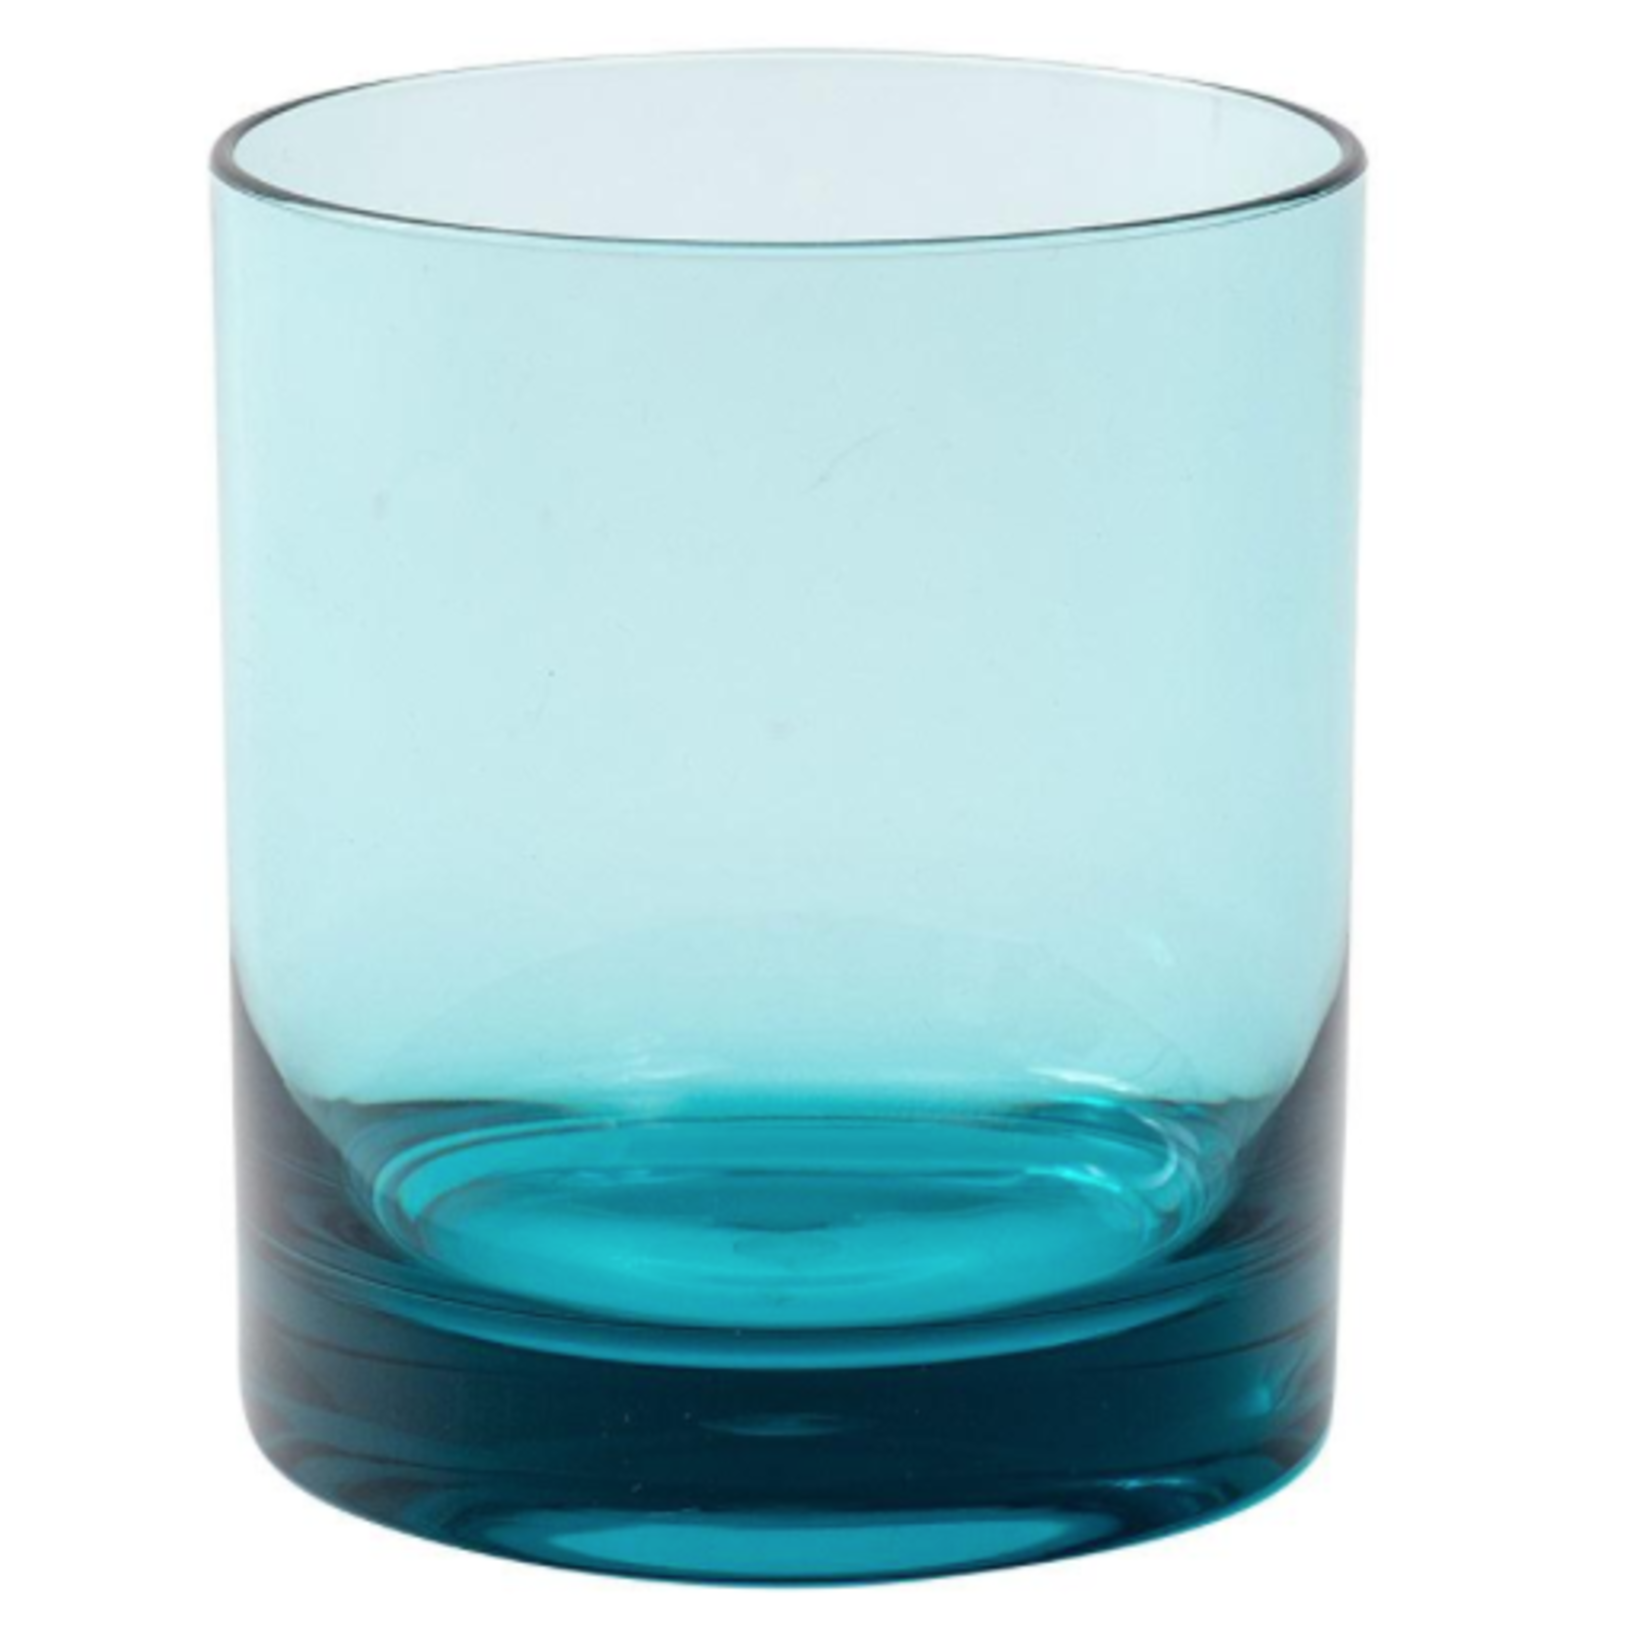 Caspari Special order ACR302 Caspari 14 oz Rock Glass Acrylic Turquoise BPA free